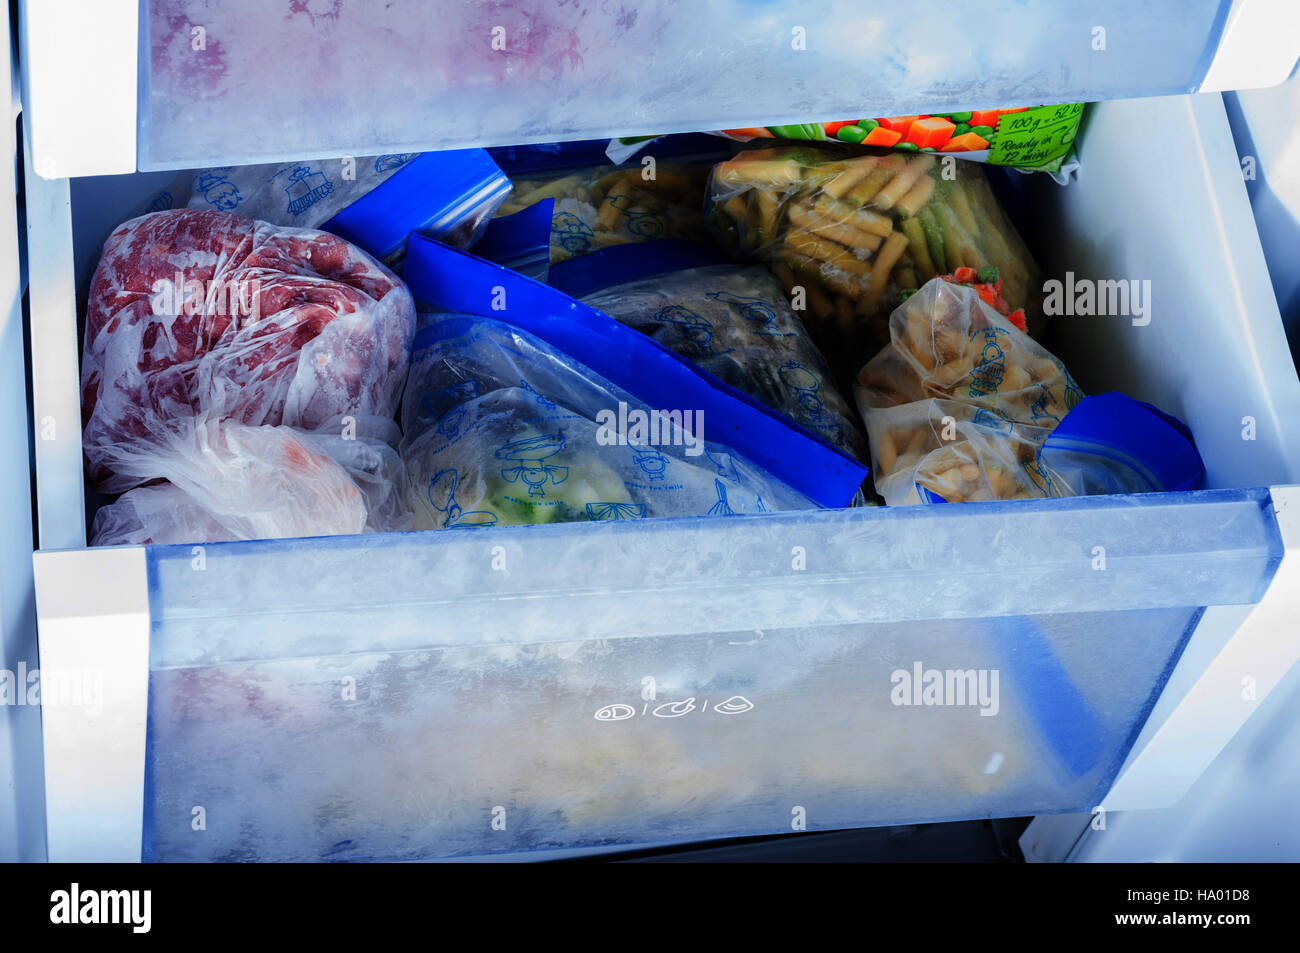 Bolsas para congelar fotografías e imágenes de alta resolución - Alamy